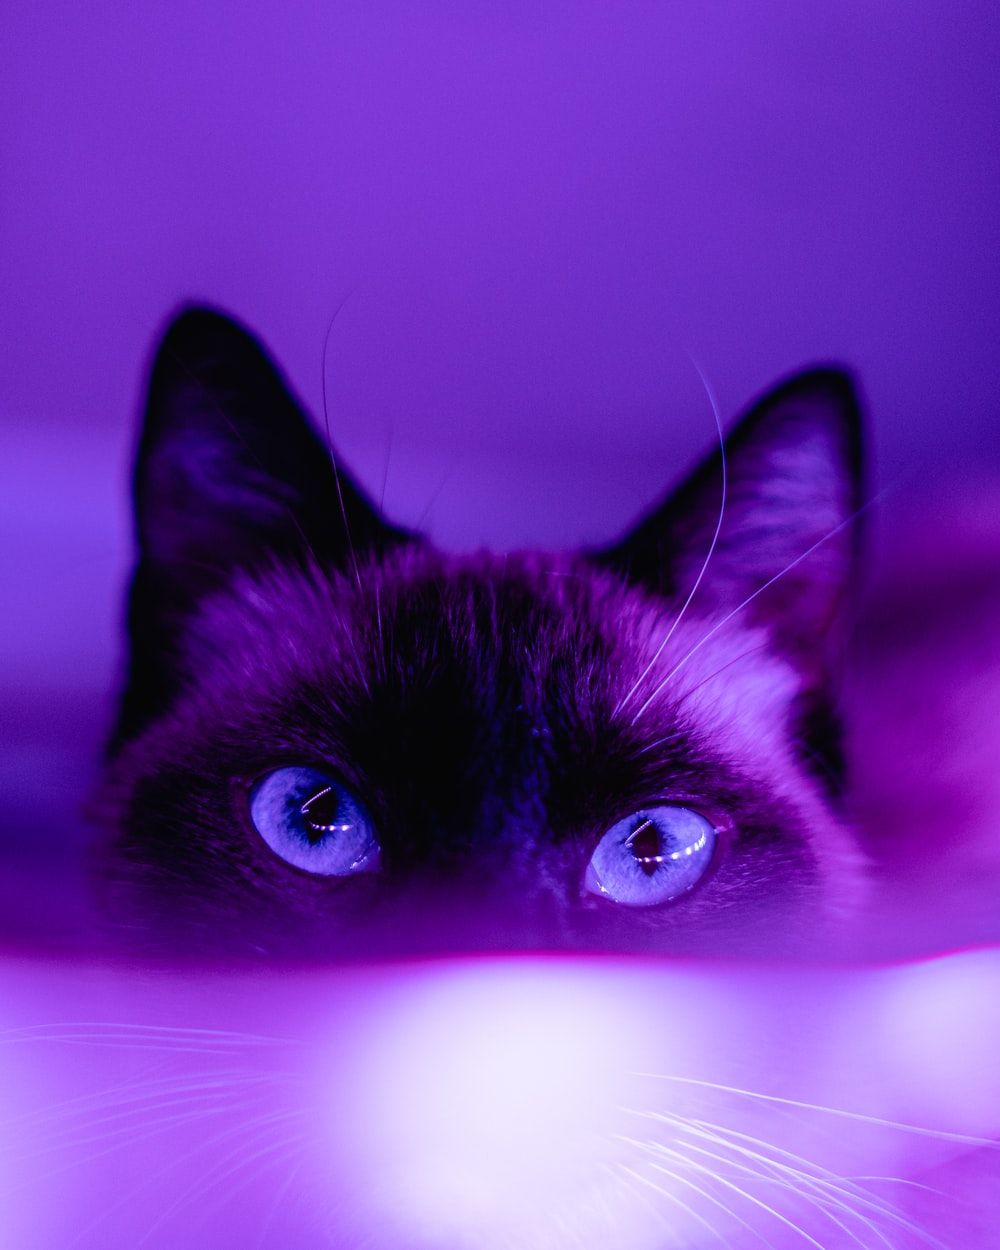 Purple Cat Picture. Download Free .com